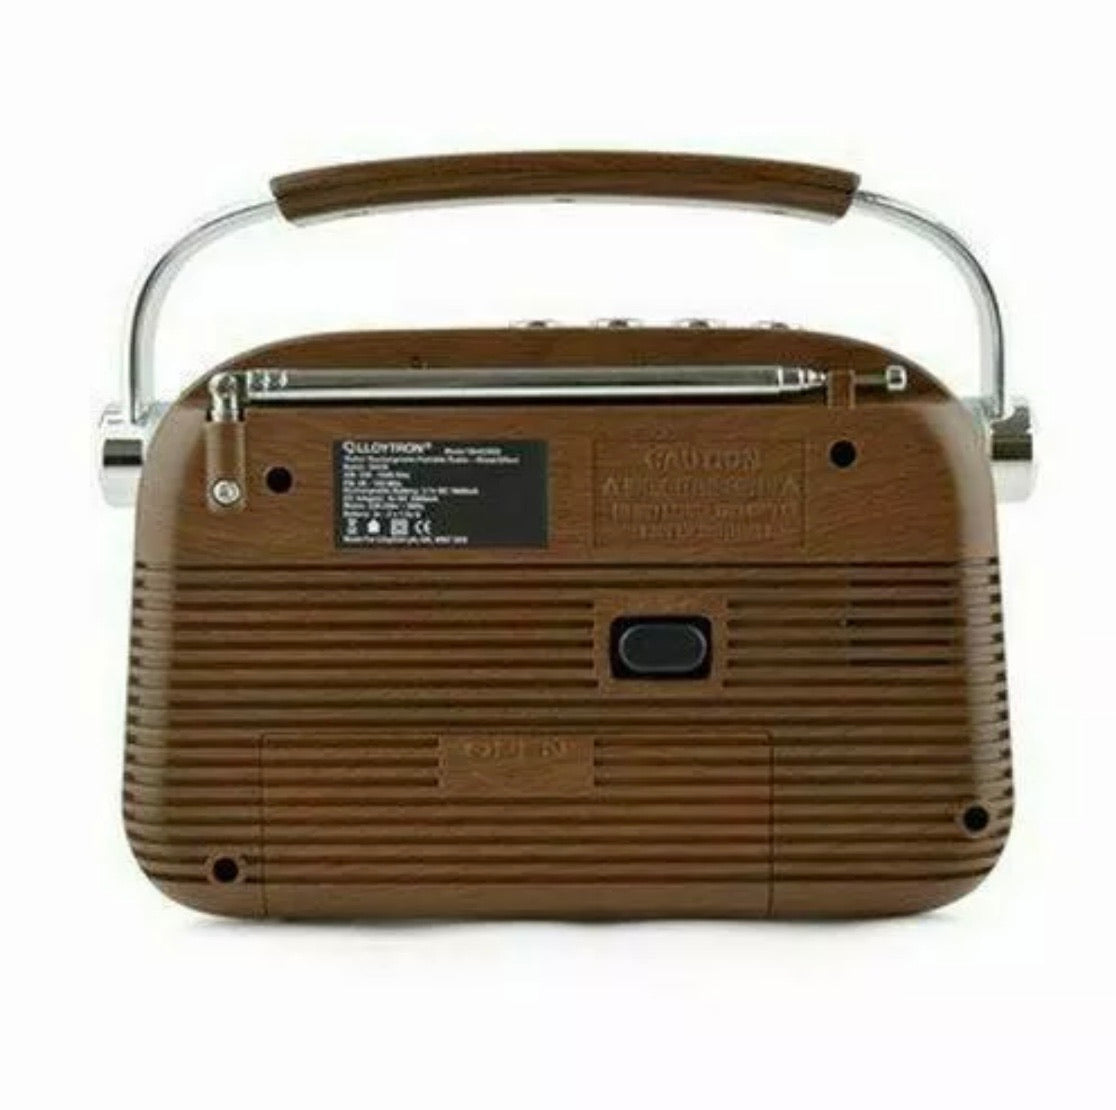 Lloytron Bluetooth Rechargeable Radio Vintage. Fm-am-mp3-bluetooth.